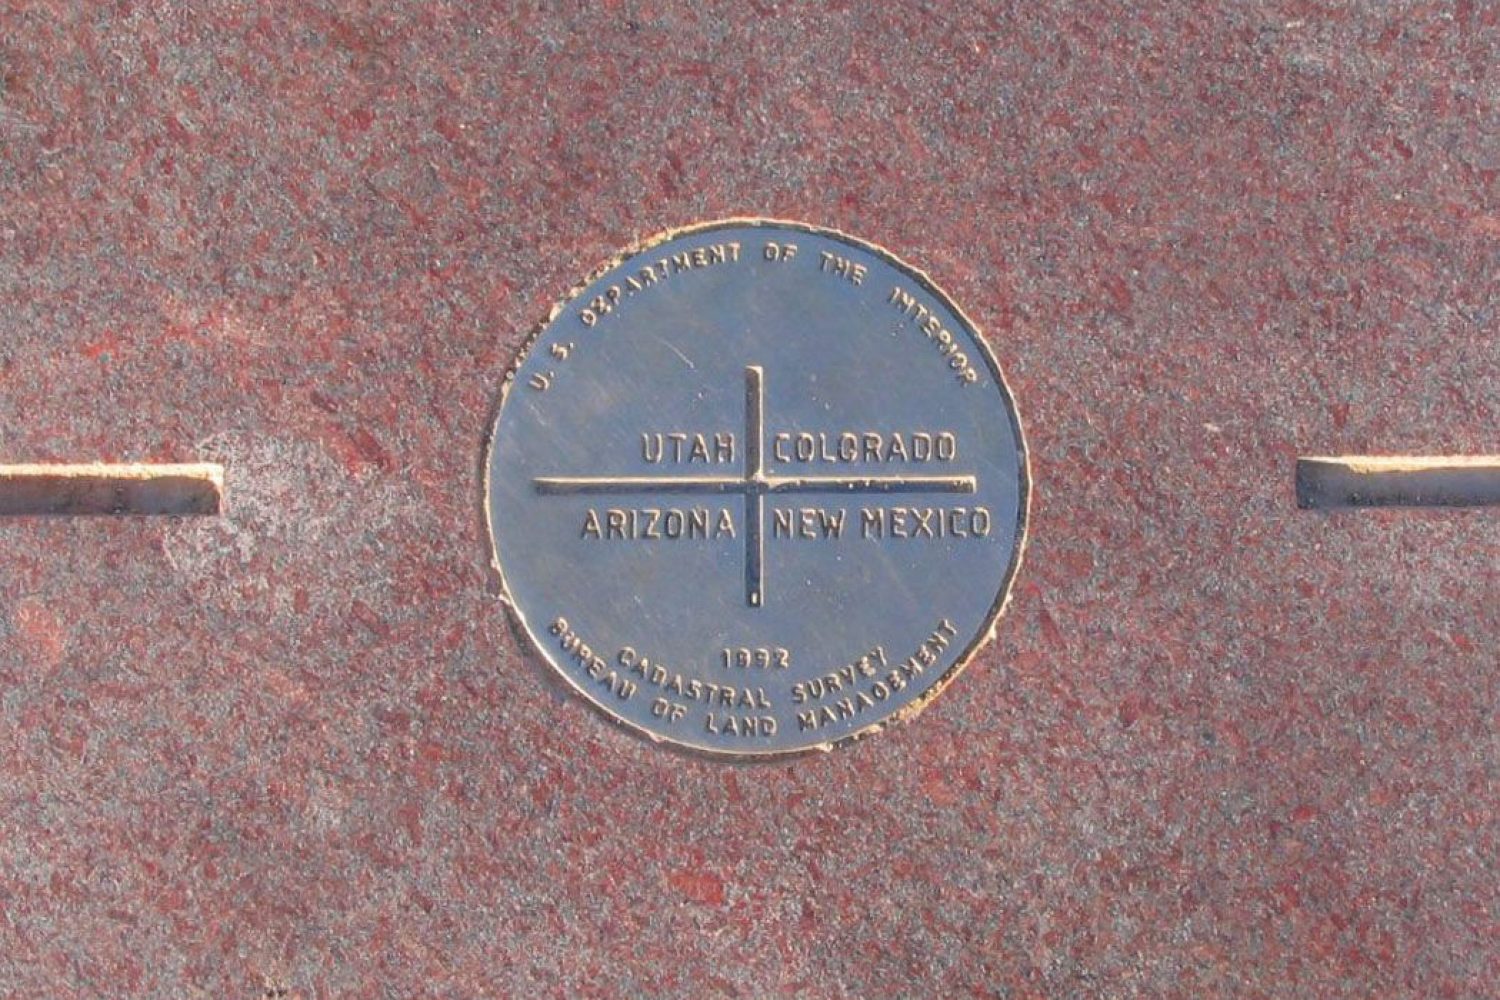 plaque noting the boundary of New Mexico, Colorado, Arizona, and Utah